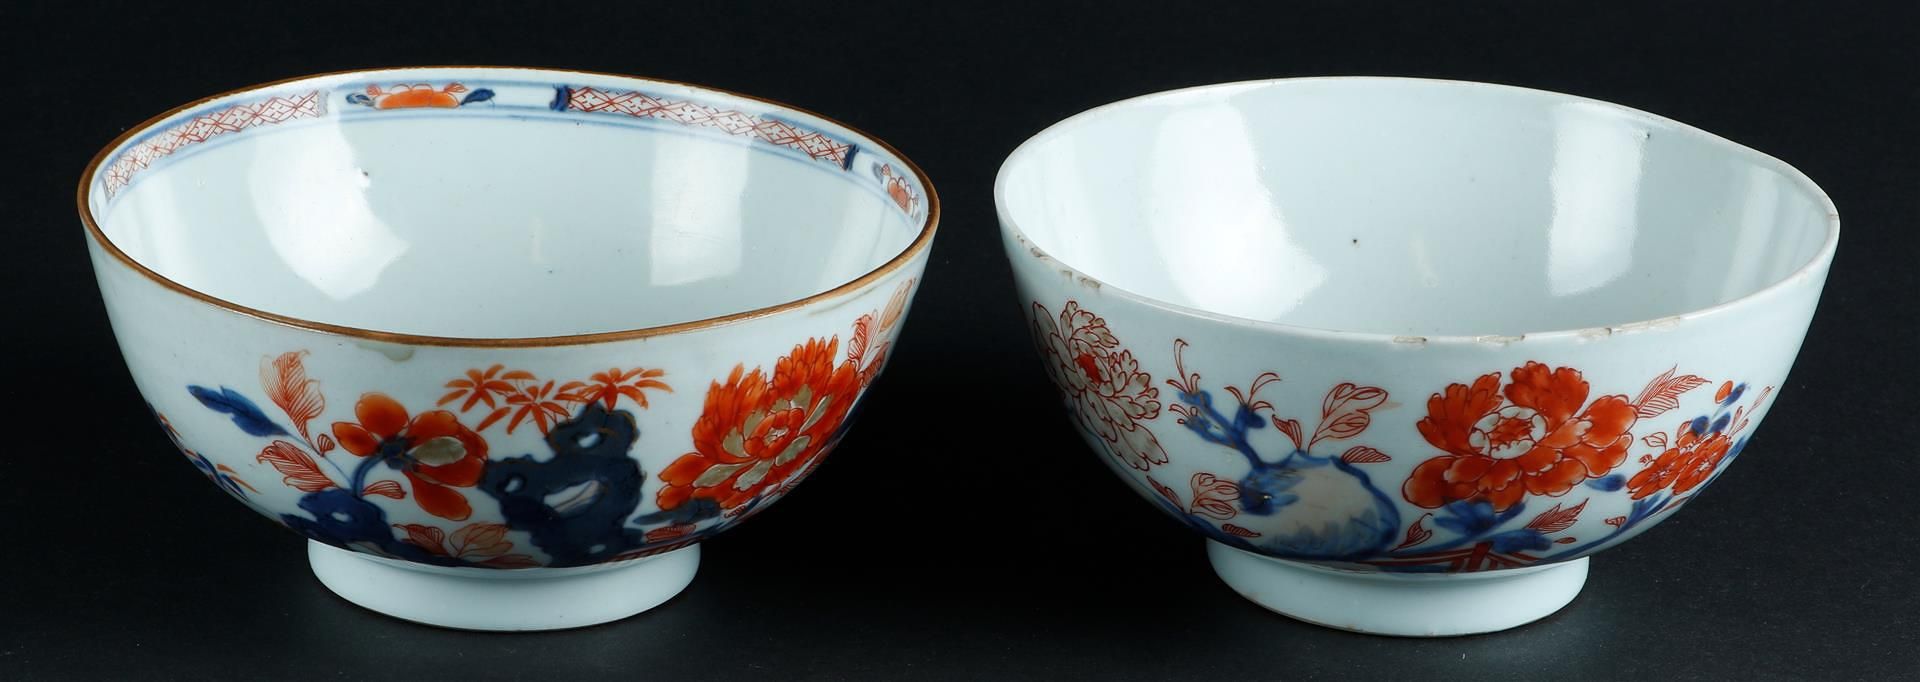 Two porcelain Imari bowls with floral decor. China, Qianlong.